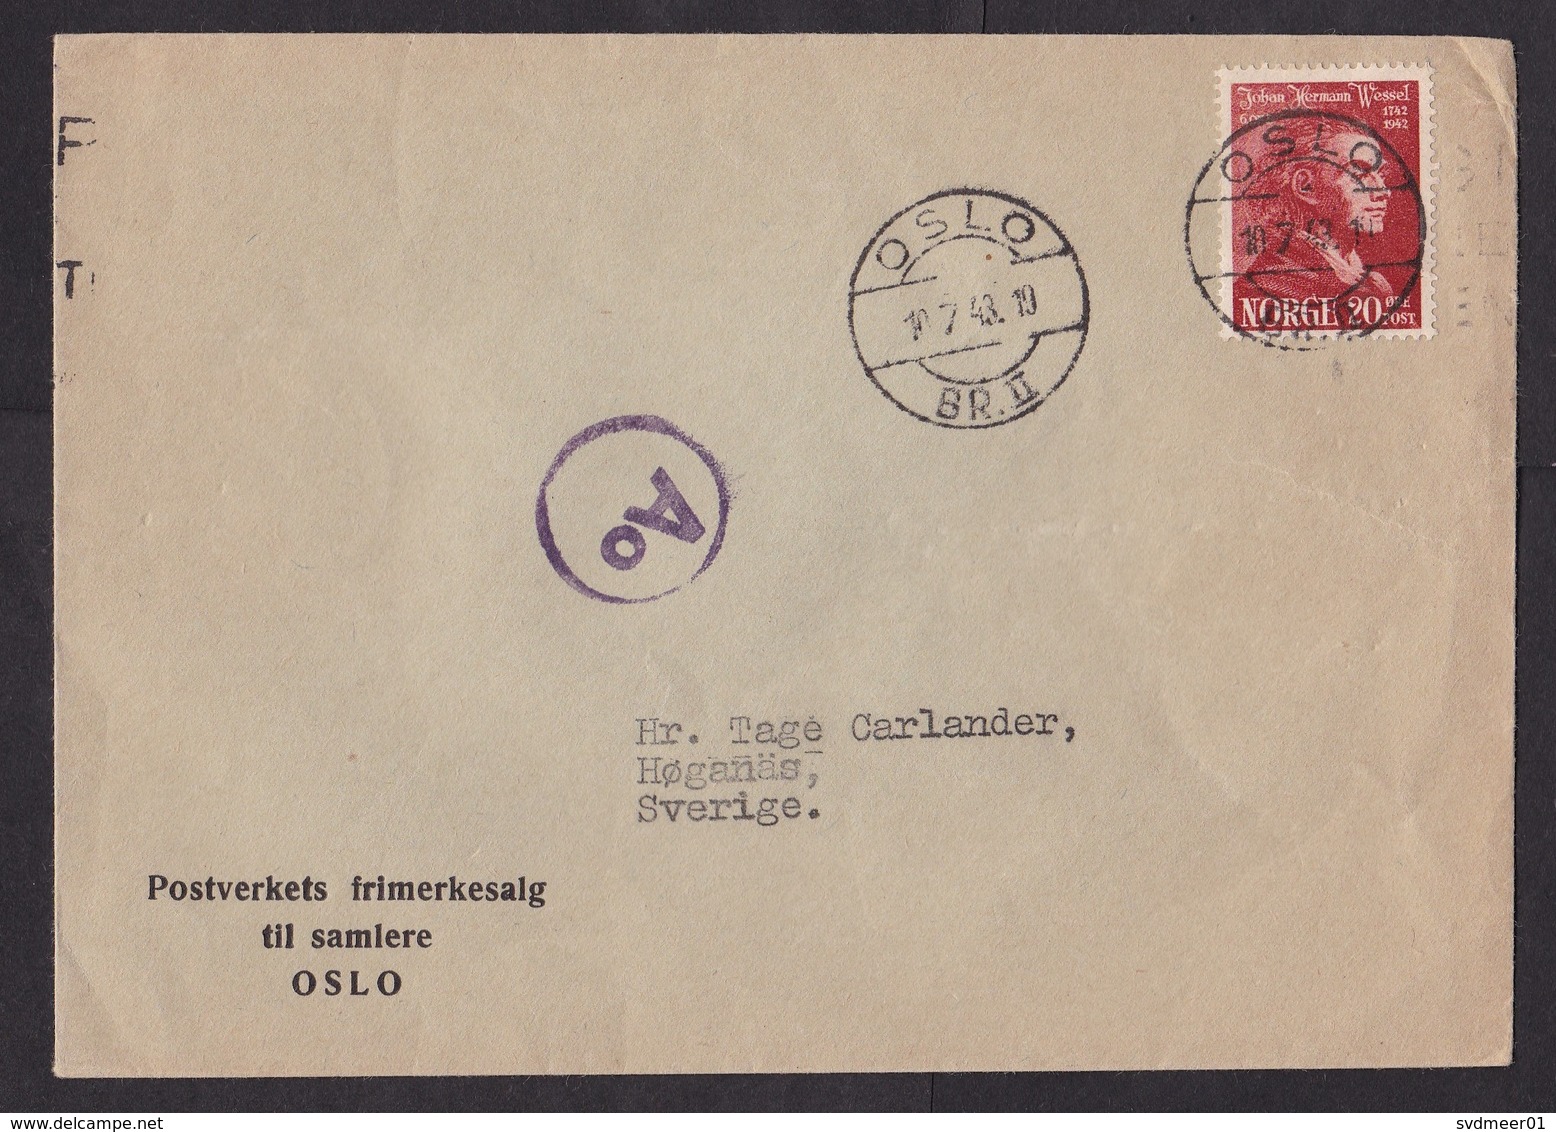 Norway: Cover To Sweden, 1943, 1 Stamp, Wessel, Author, Poet, Censored, Censor Cancel Ao, Rare (minor Crease) - Brieven En Documenten